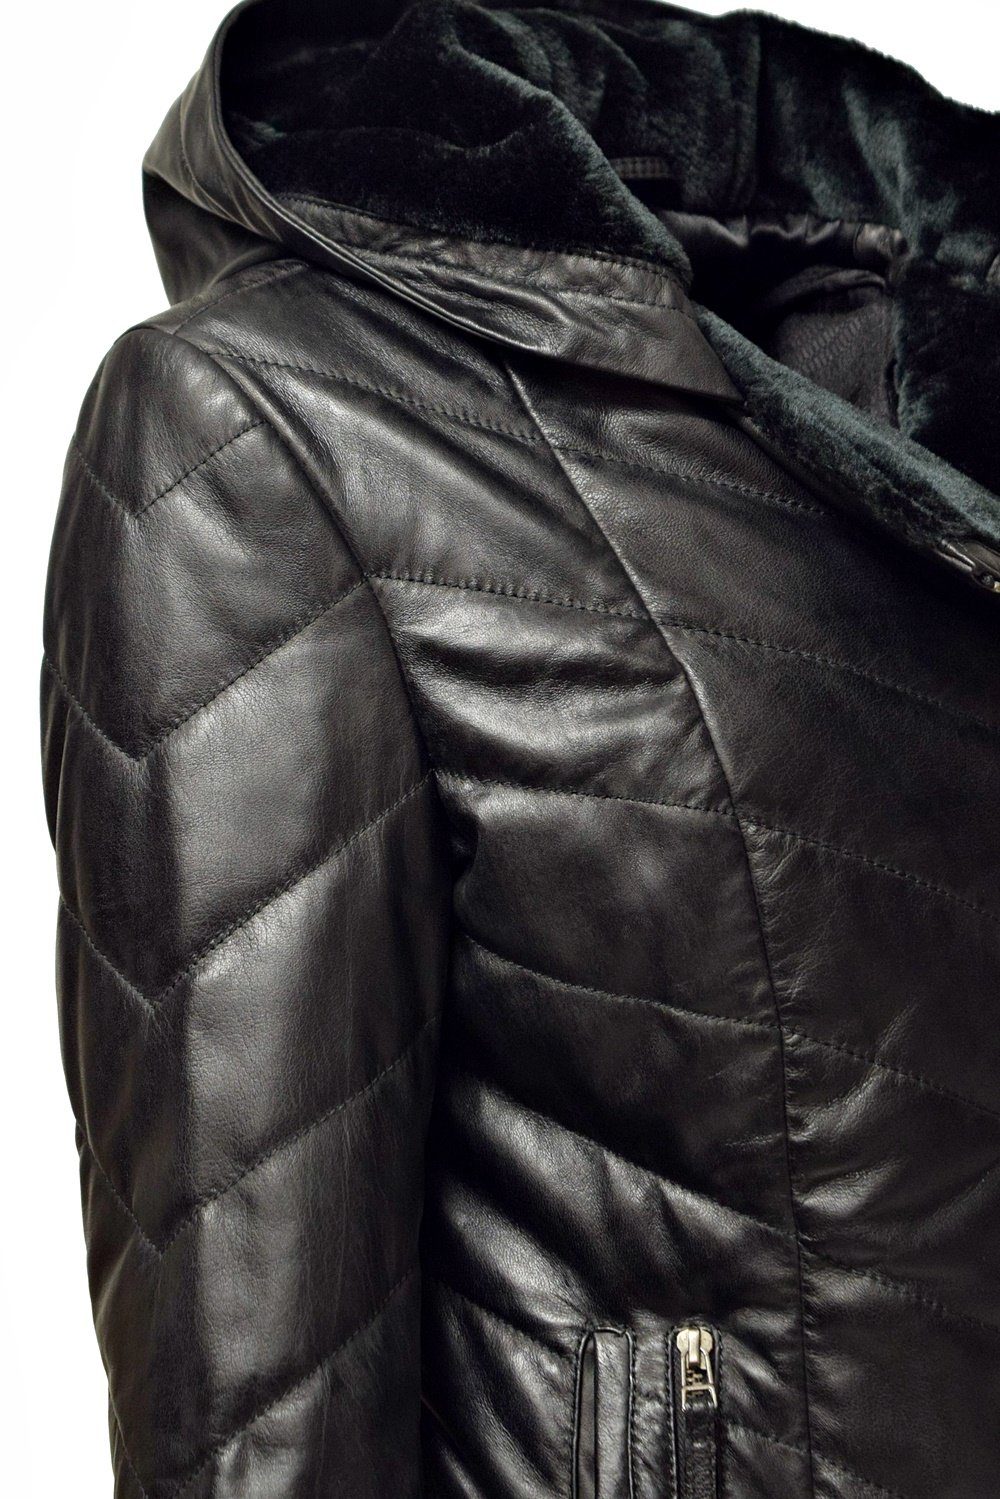 mit weichem Schwarz Leder Leather Mariella Kapuze aus Zimmert Stepp-Lederjacke Lederjacke